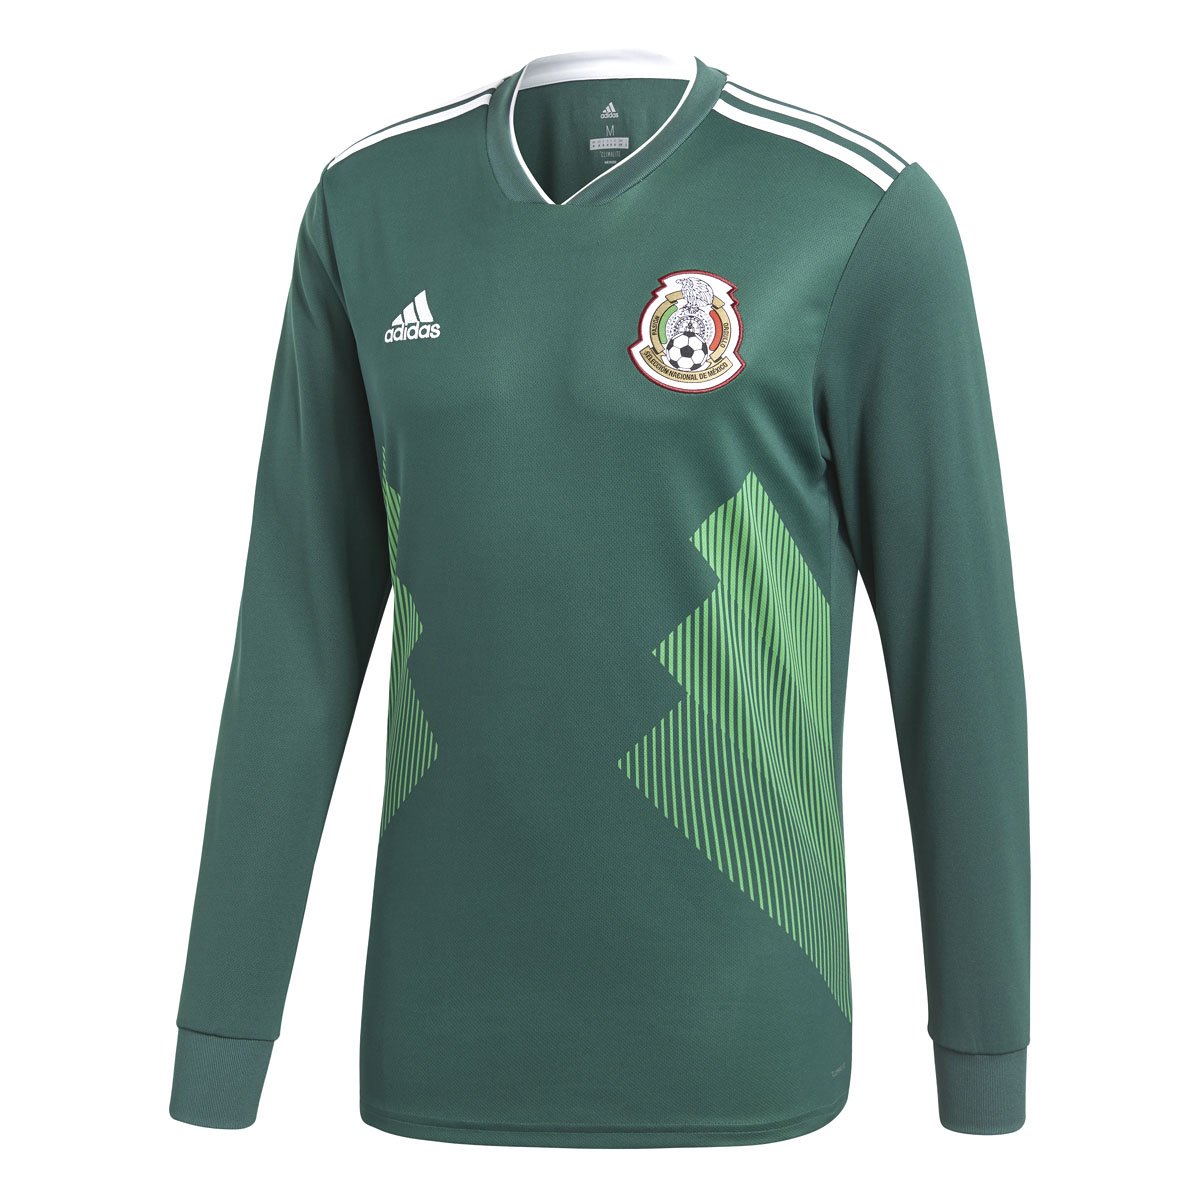 Adidas Jersey-Playera Rusia 2018 / Local Replica Mexico - Caballero